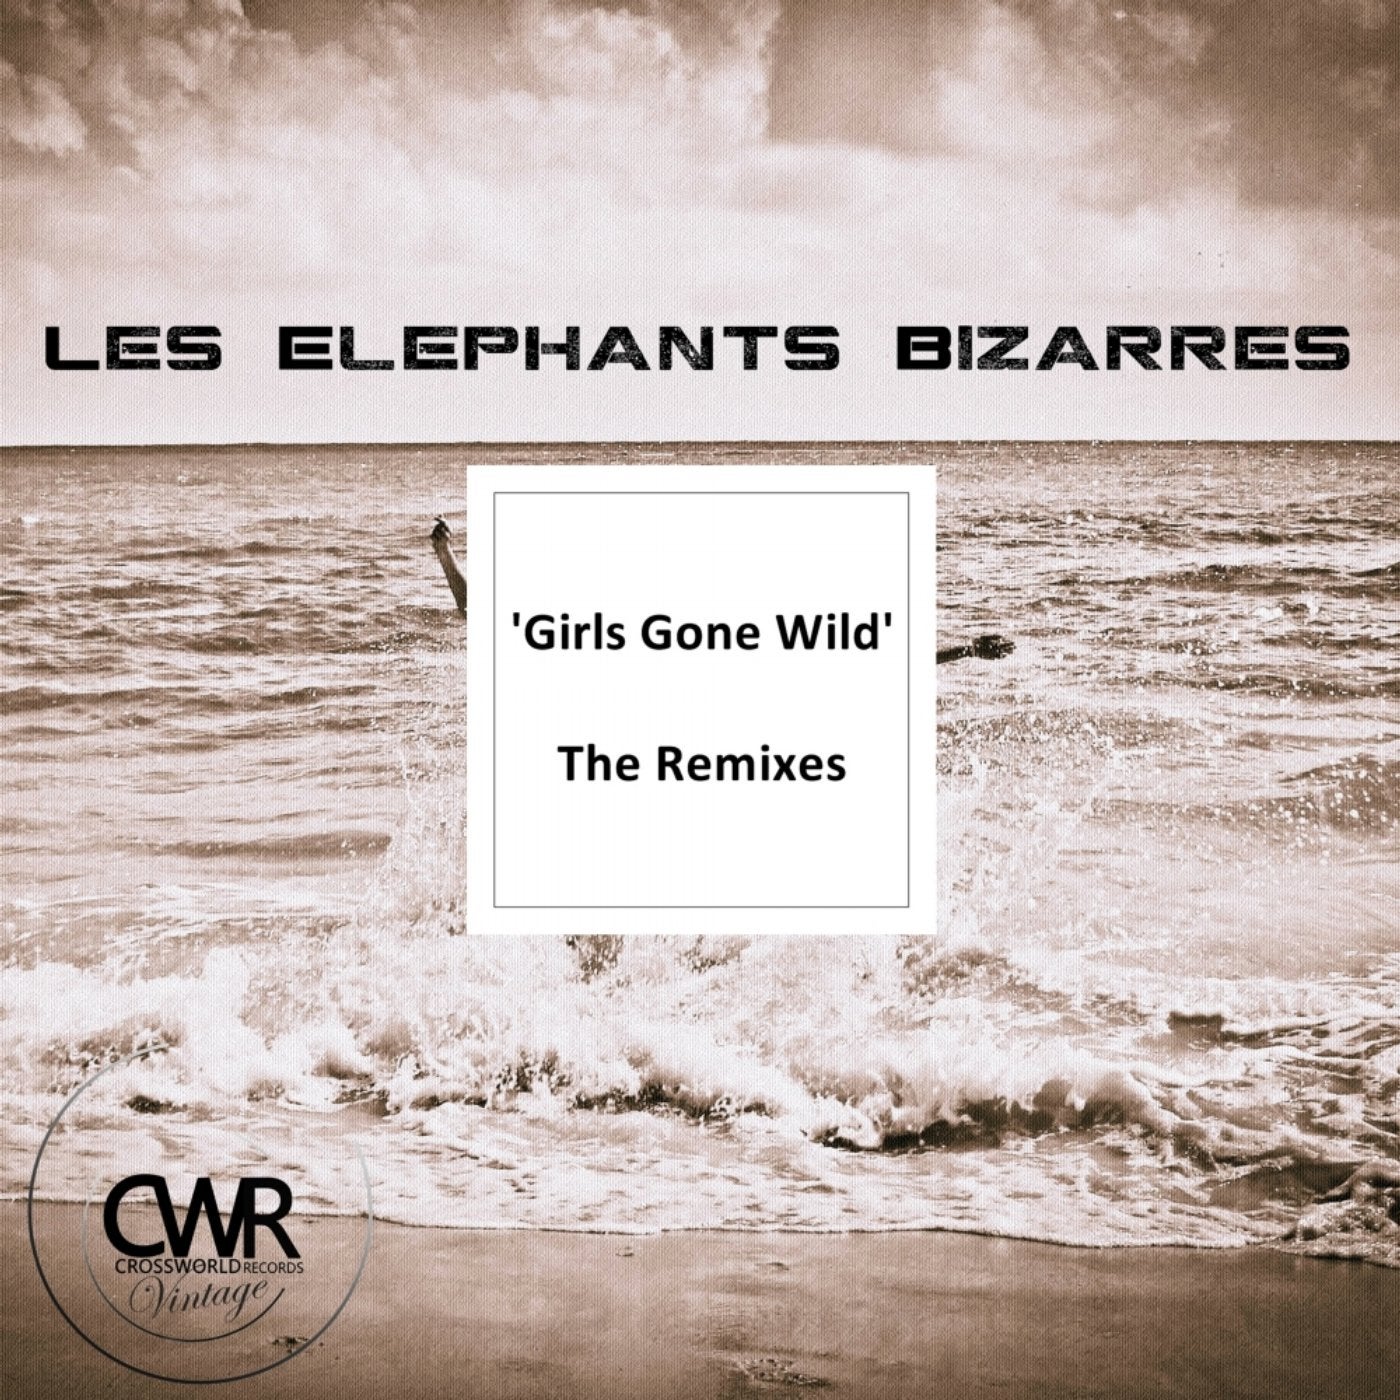 Girls Gone Wild: The Remixes